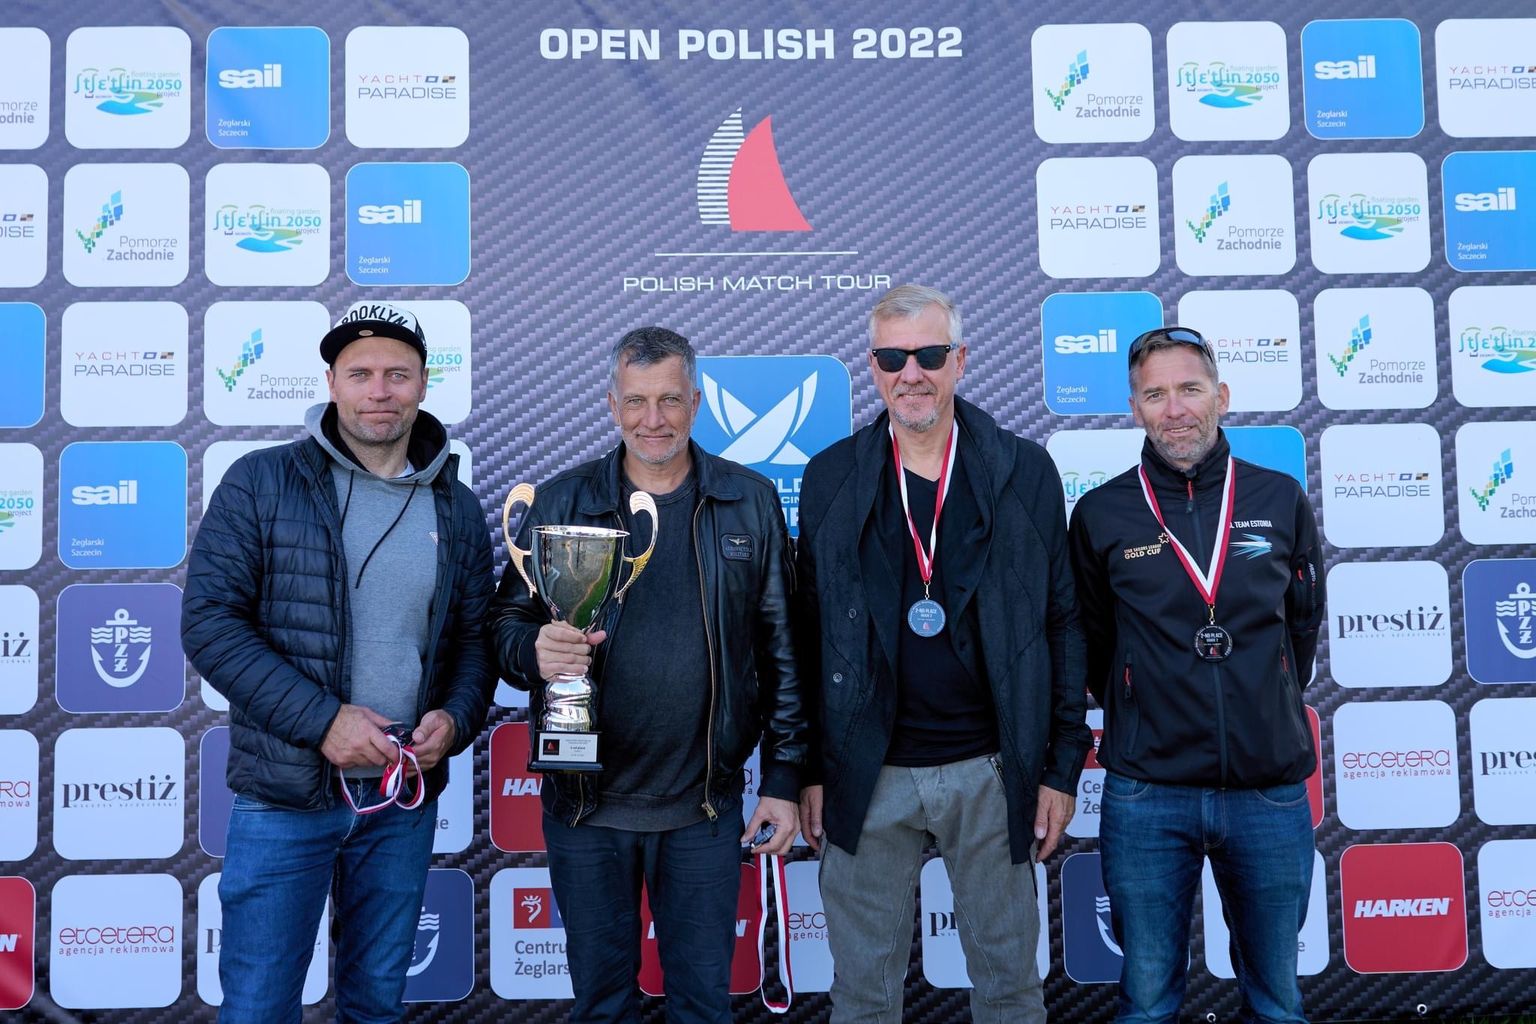 Eesti match race meeskond